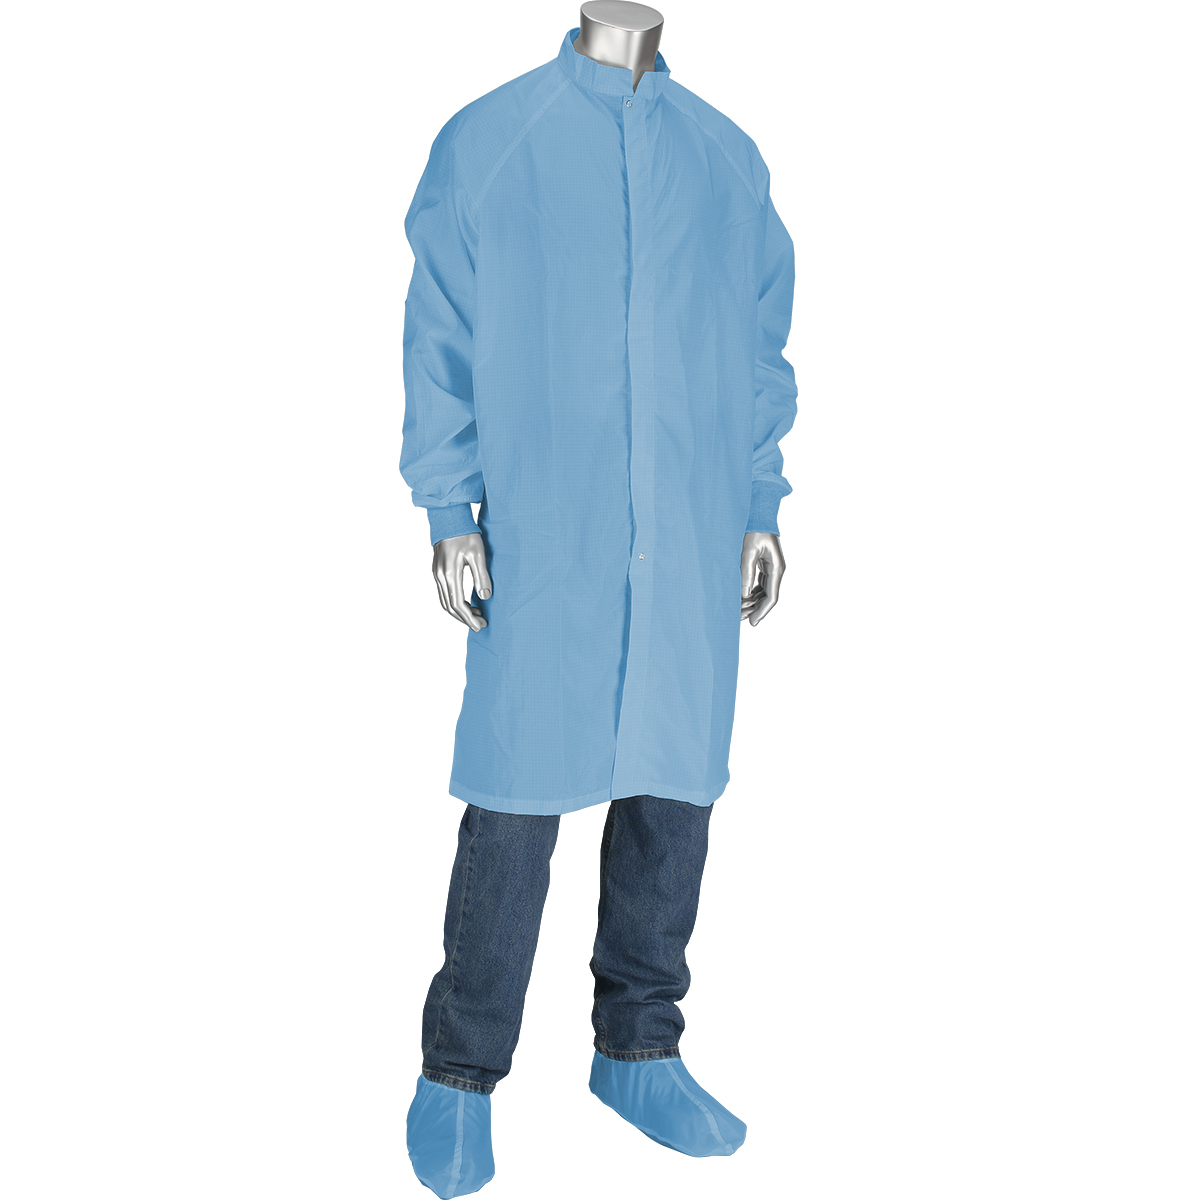  Uniform Technology™ Altessa Grid ISO 5 (Class 100) Cleanroom Frocks - light blue